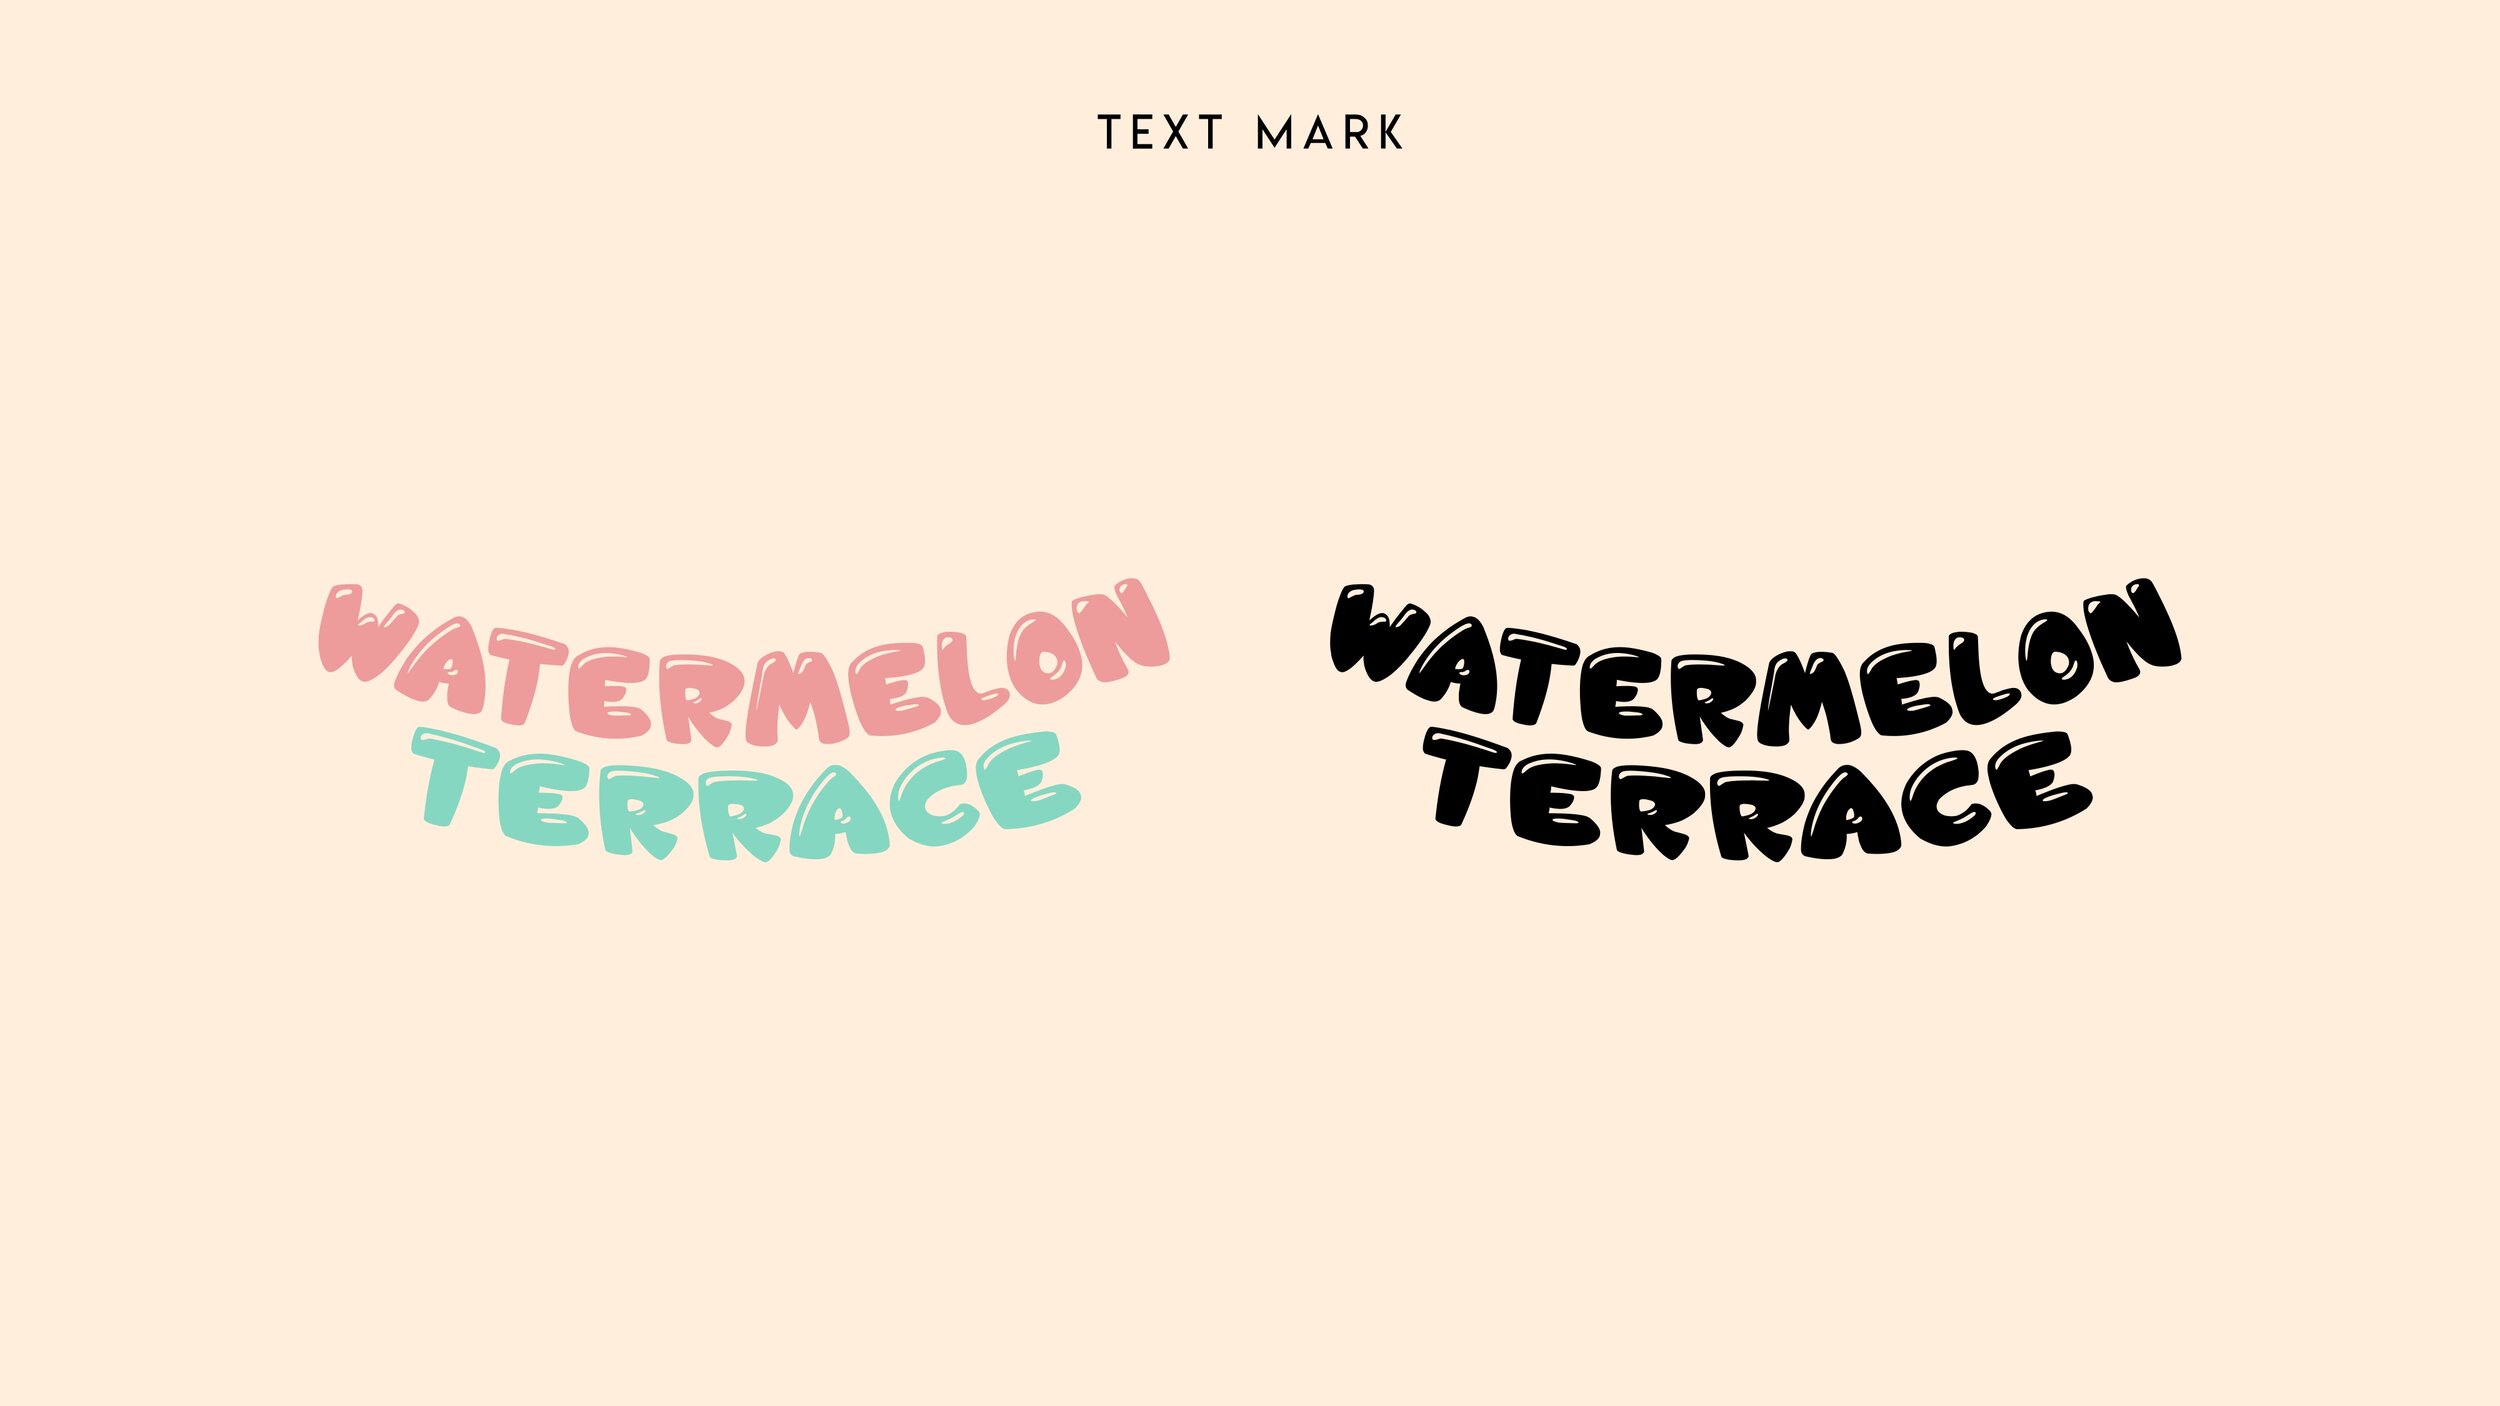 WatermelonTerrace_Deck_V1_compressed (1)_page-0007.jpg